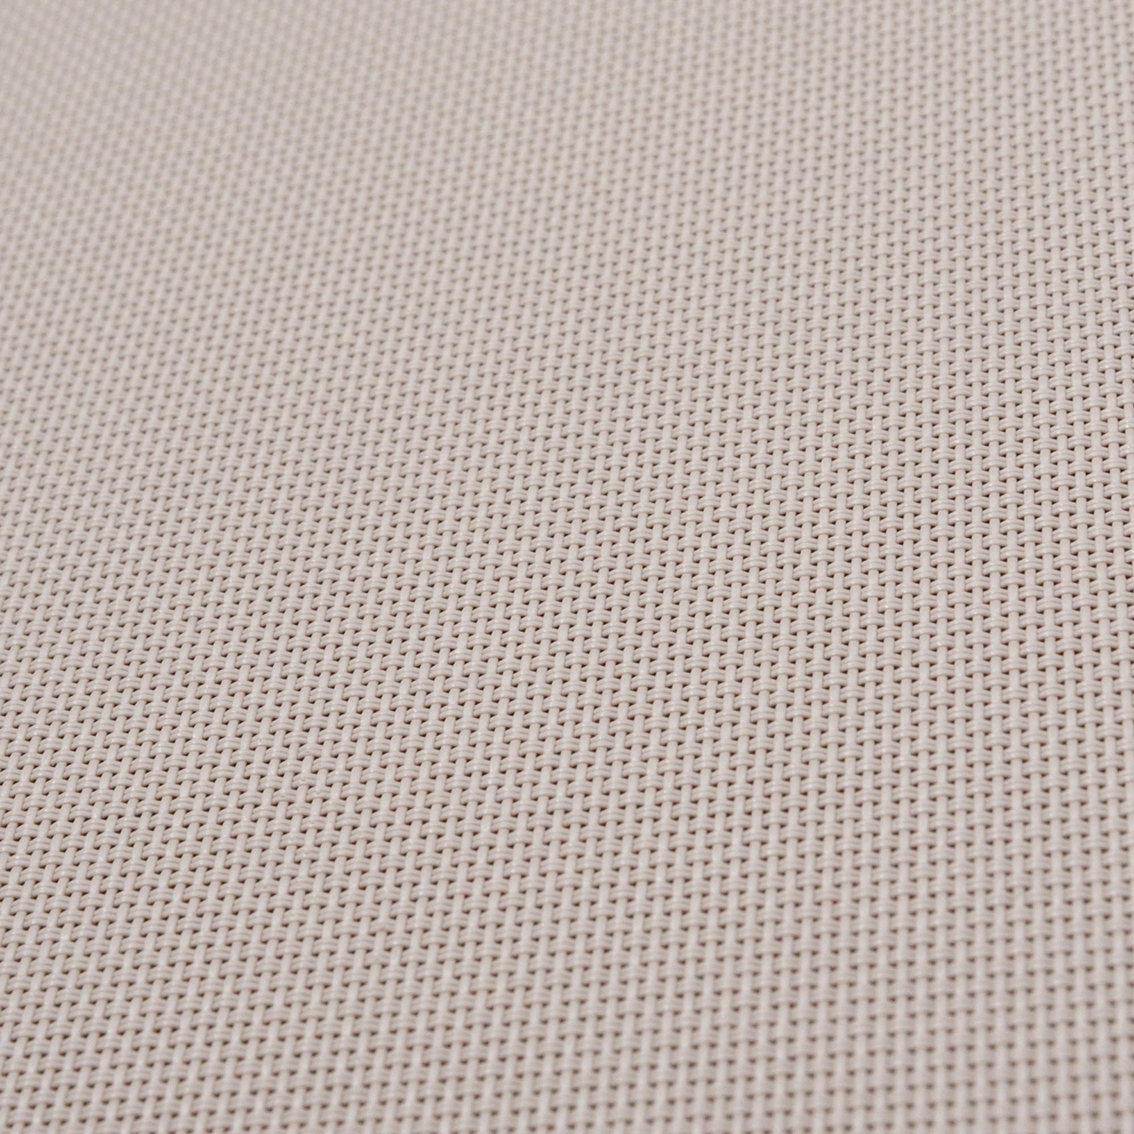 Keystone Fabrics Regal Rechargeable Motorized Outdoor Sun Shade - Image 2 of 2